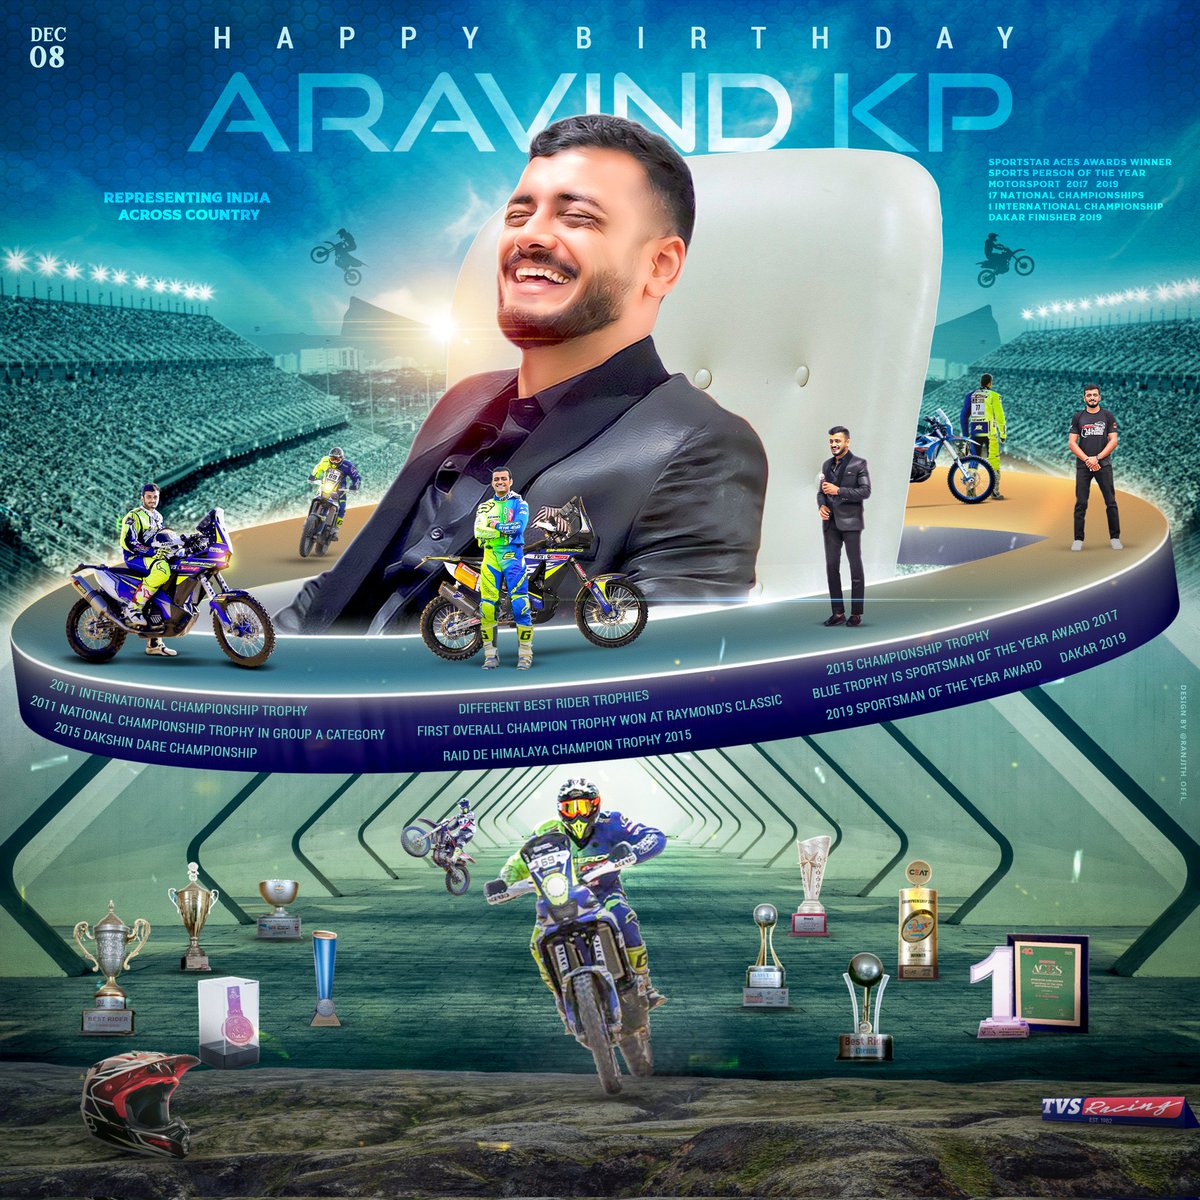 Our Official CDP Design for @aravindkp85 💙

#HBDAravindkp #AravindKP #TVSRacing #TVSMotorCompany @Pics2Graphics